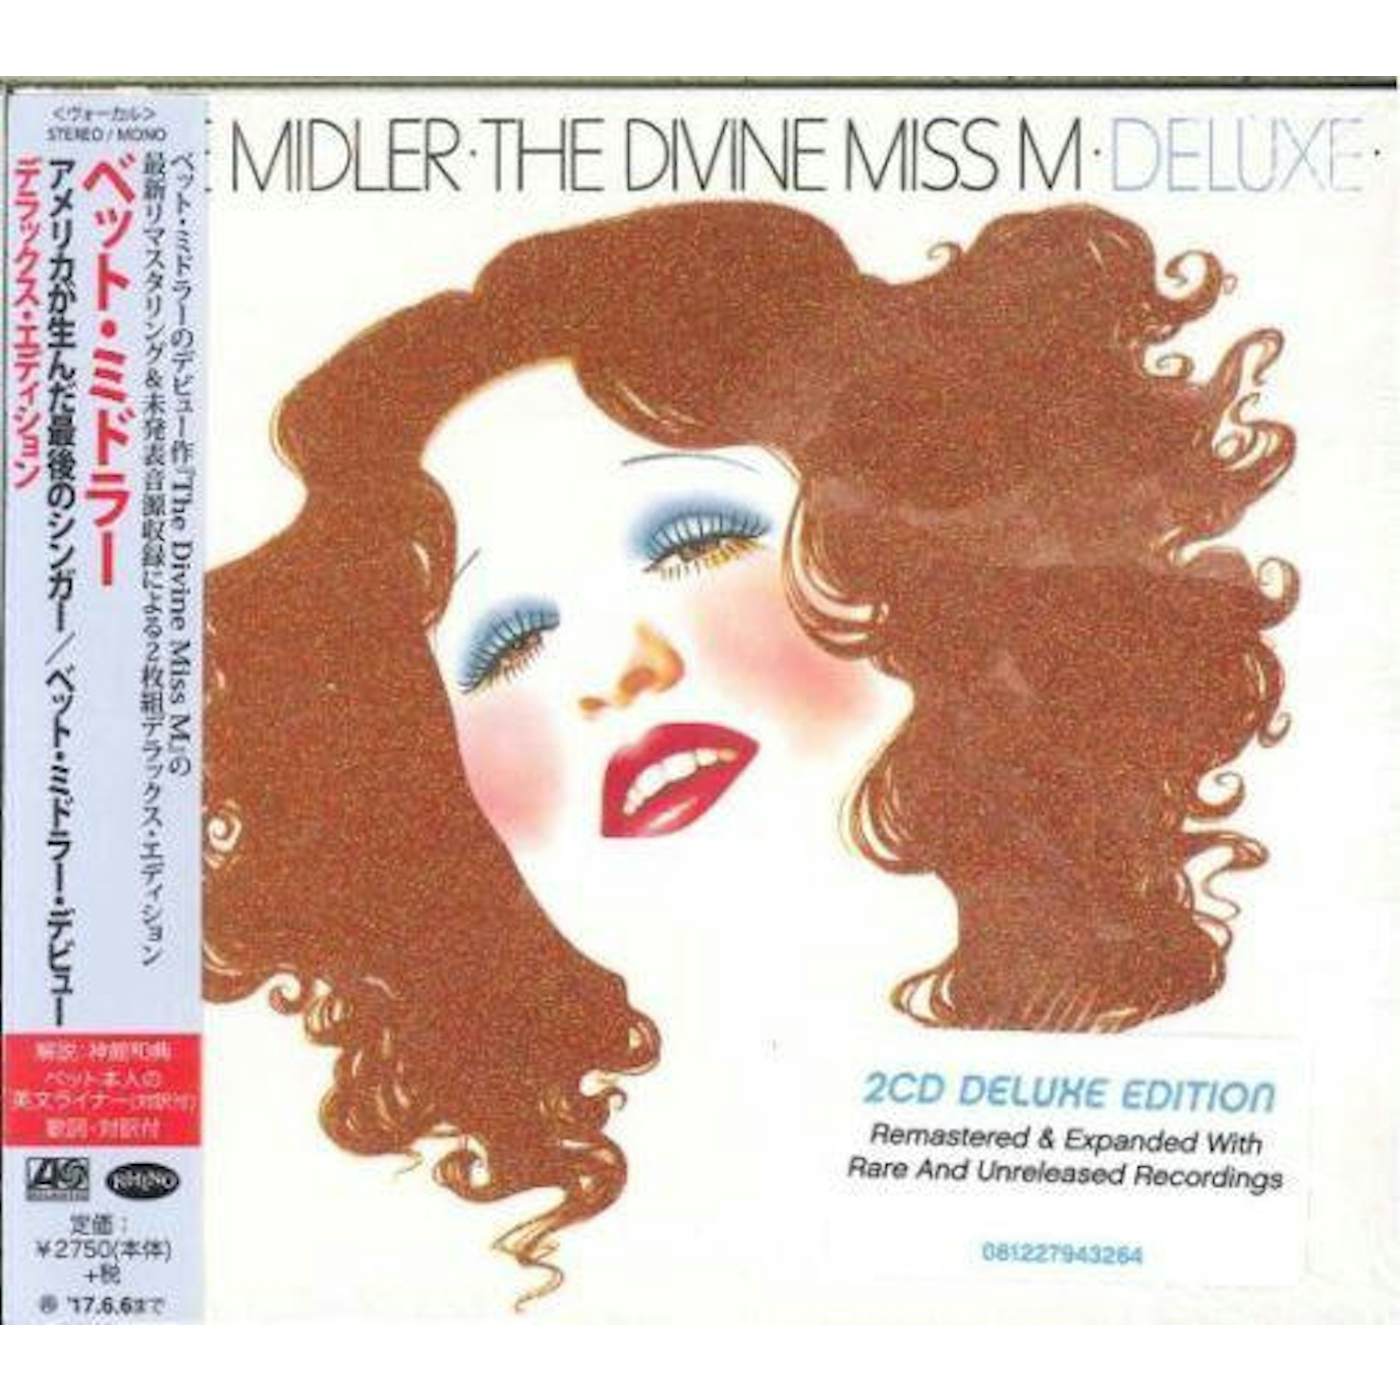 Bette Midler DIVINE MISS M (DELUXE EDITION/2LP/ REMASTERED) CD